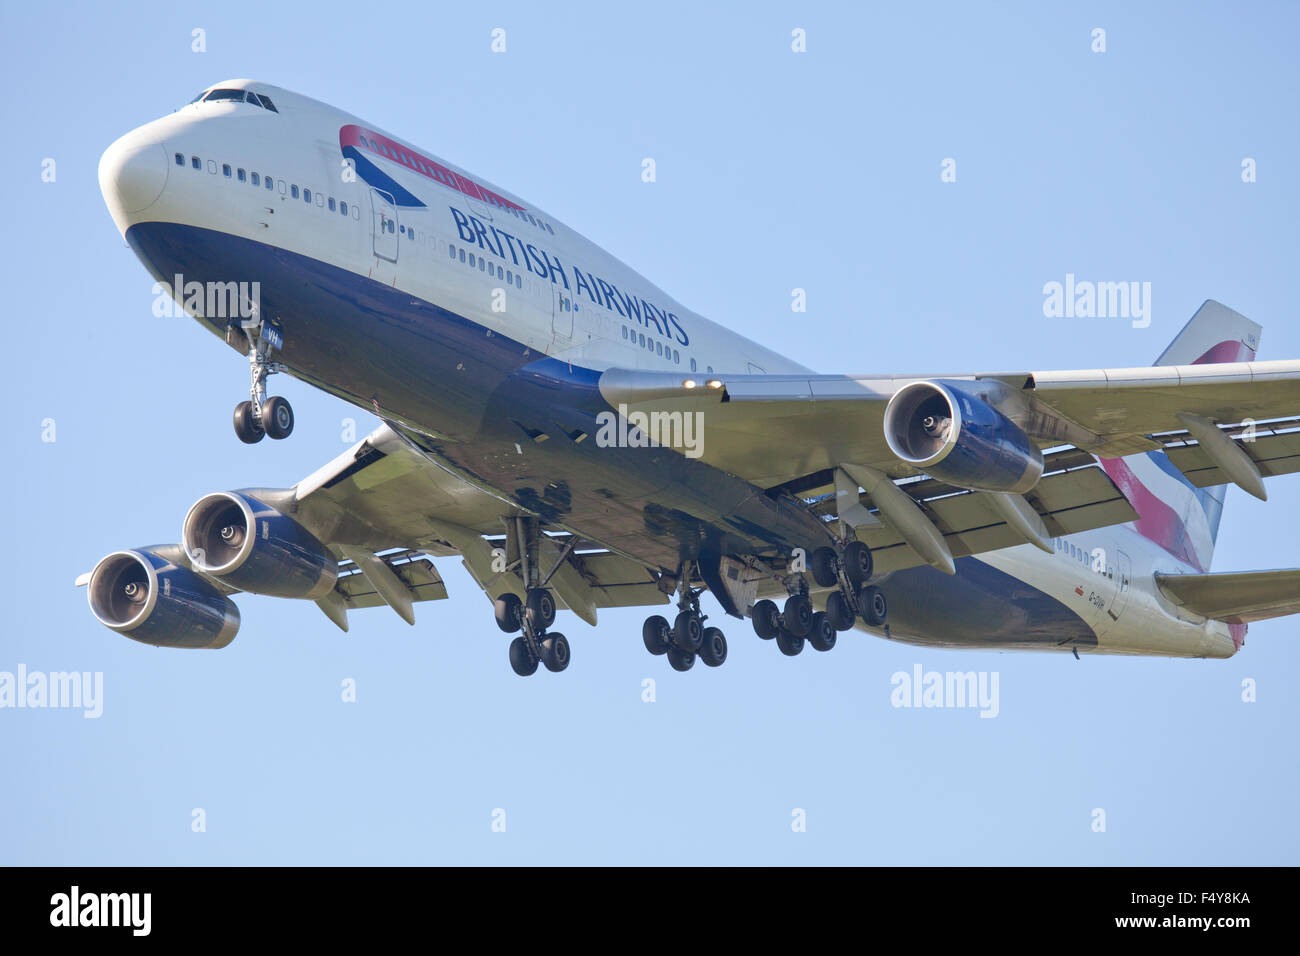 British Airways Boeing 747 jumbo getto G-CIVH venuta in terra a Londra Heathrow Airport LHR Foto Stock